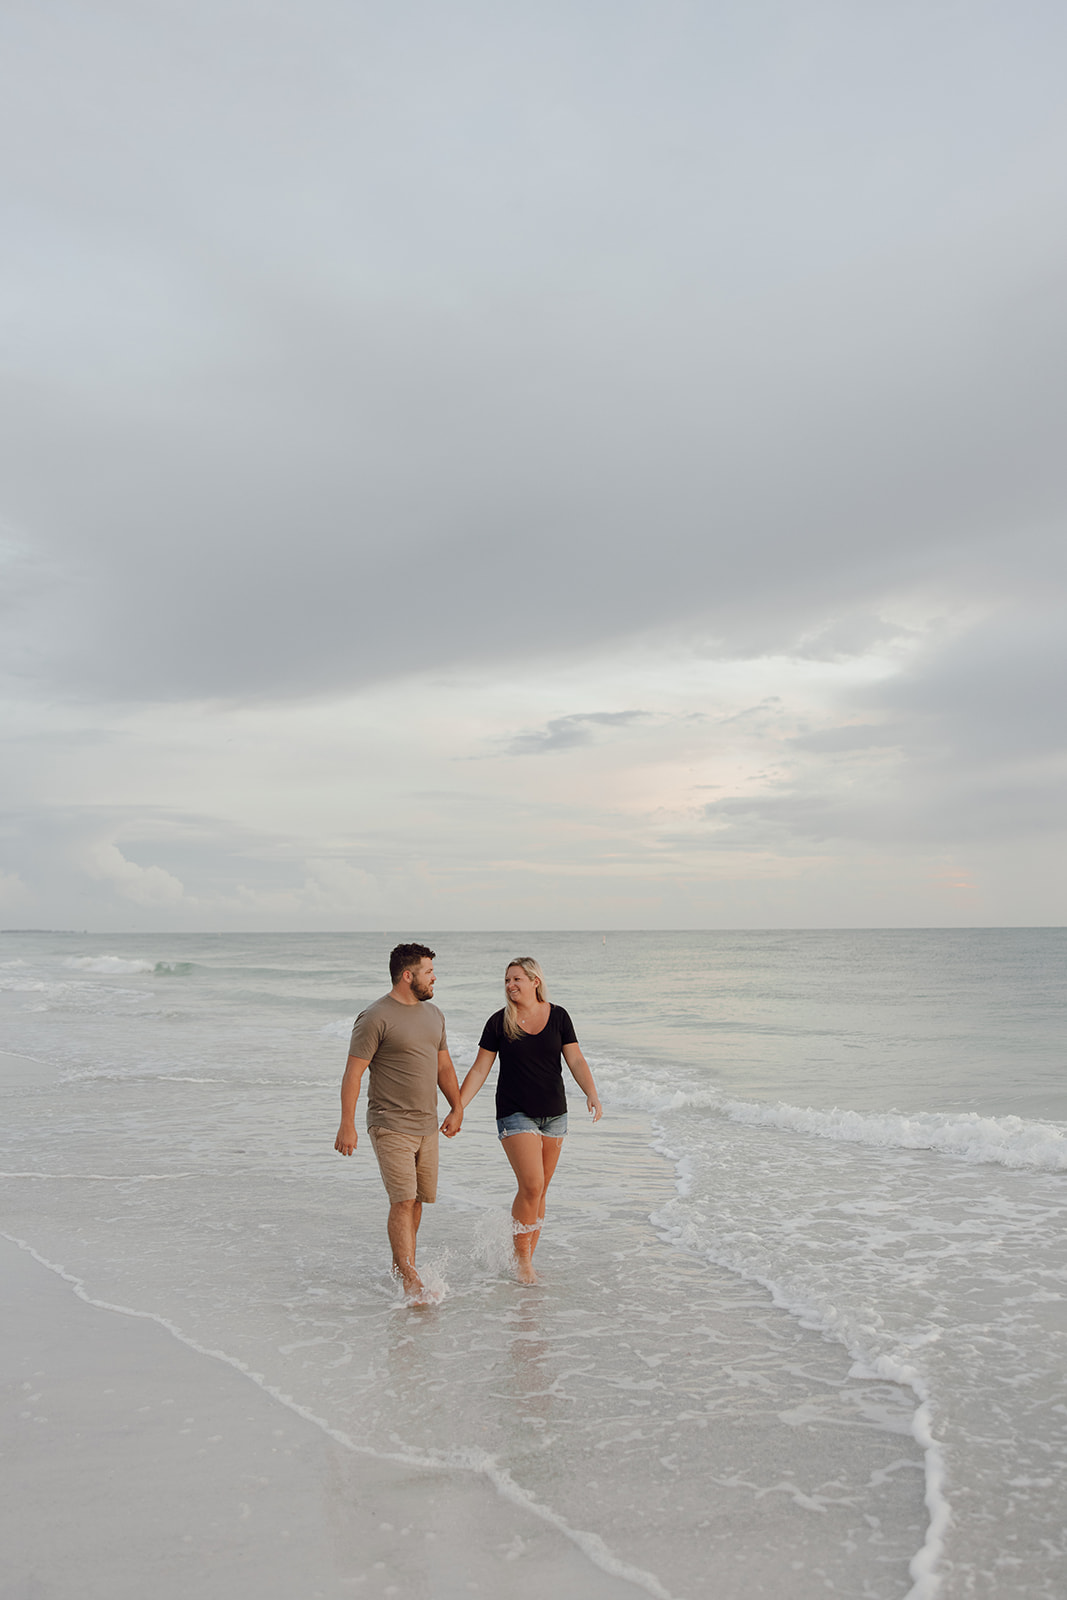 the couple holding hands as they walk down the beach as an idea for beach photoshoot